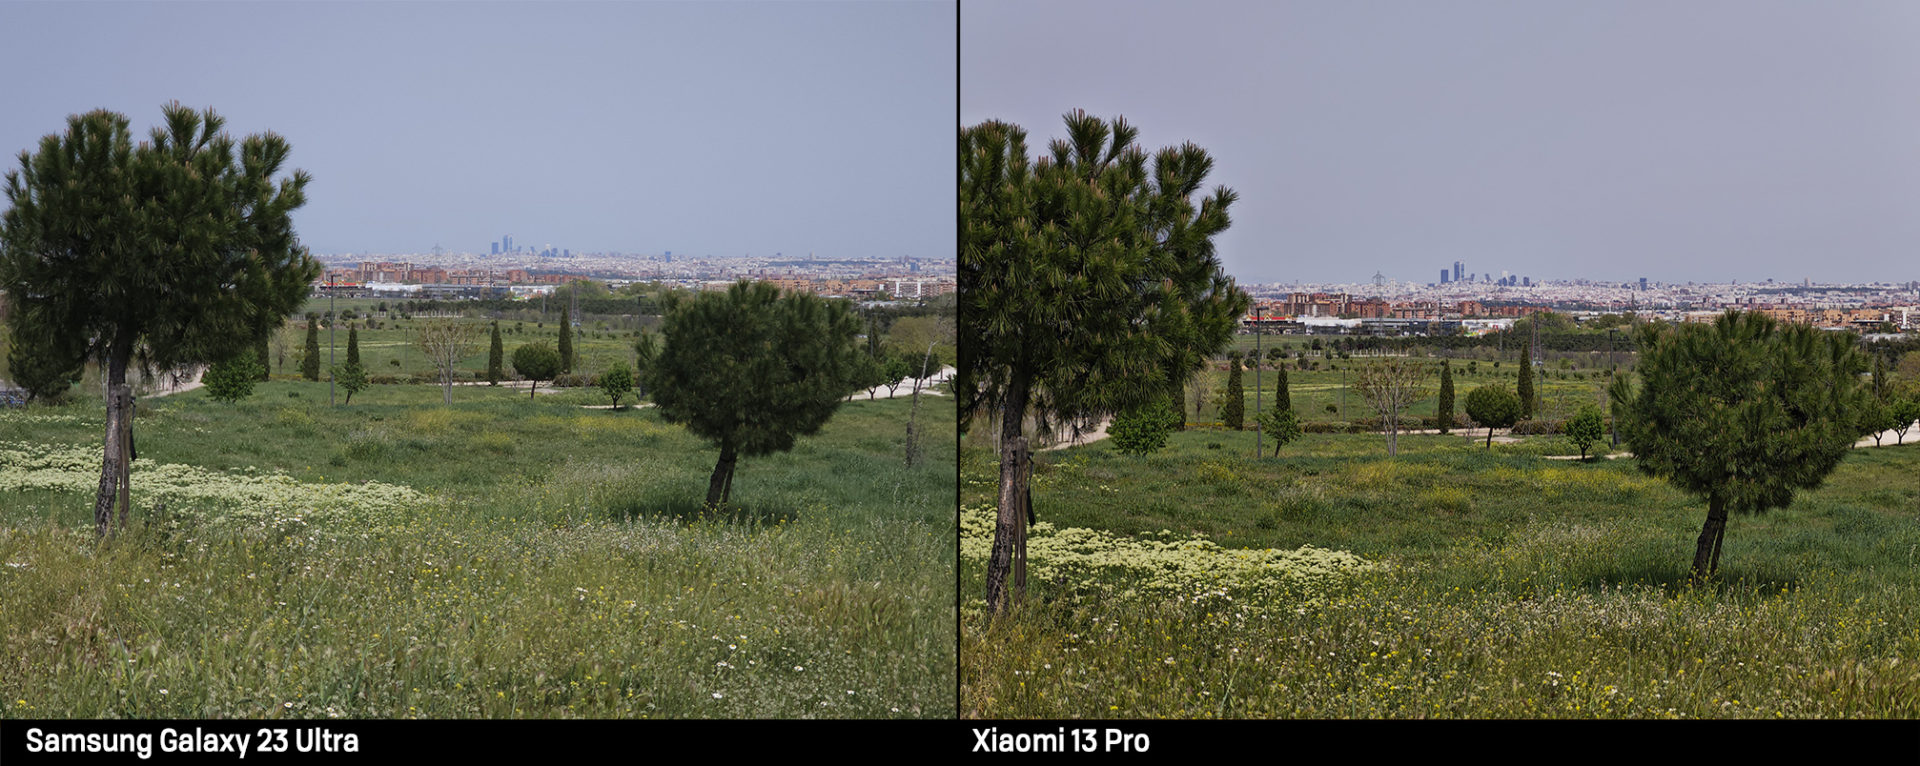 Comparativa foto paisaje con teleobjetivo Samsung S23 Ultra y Xiaomi 13 Pro